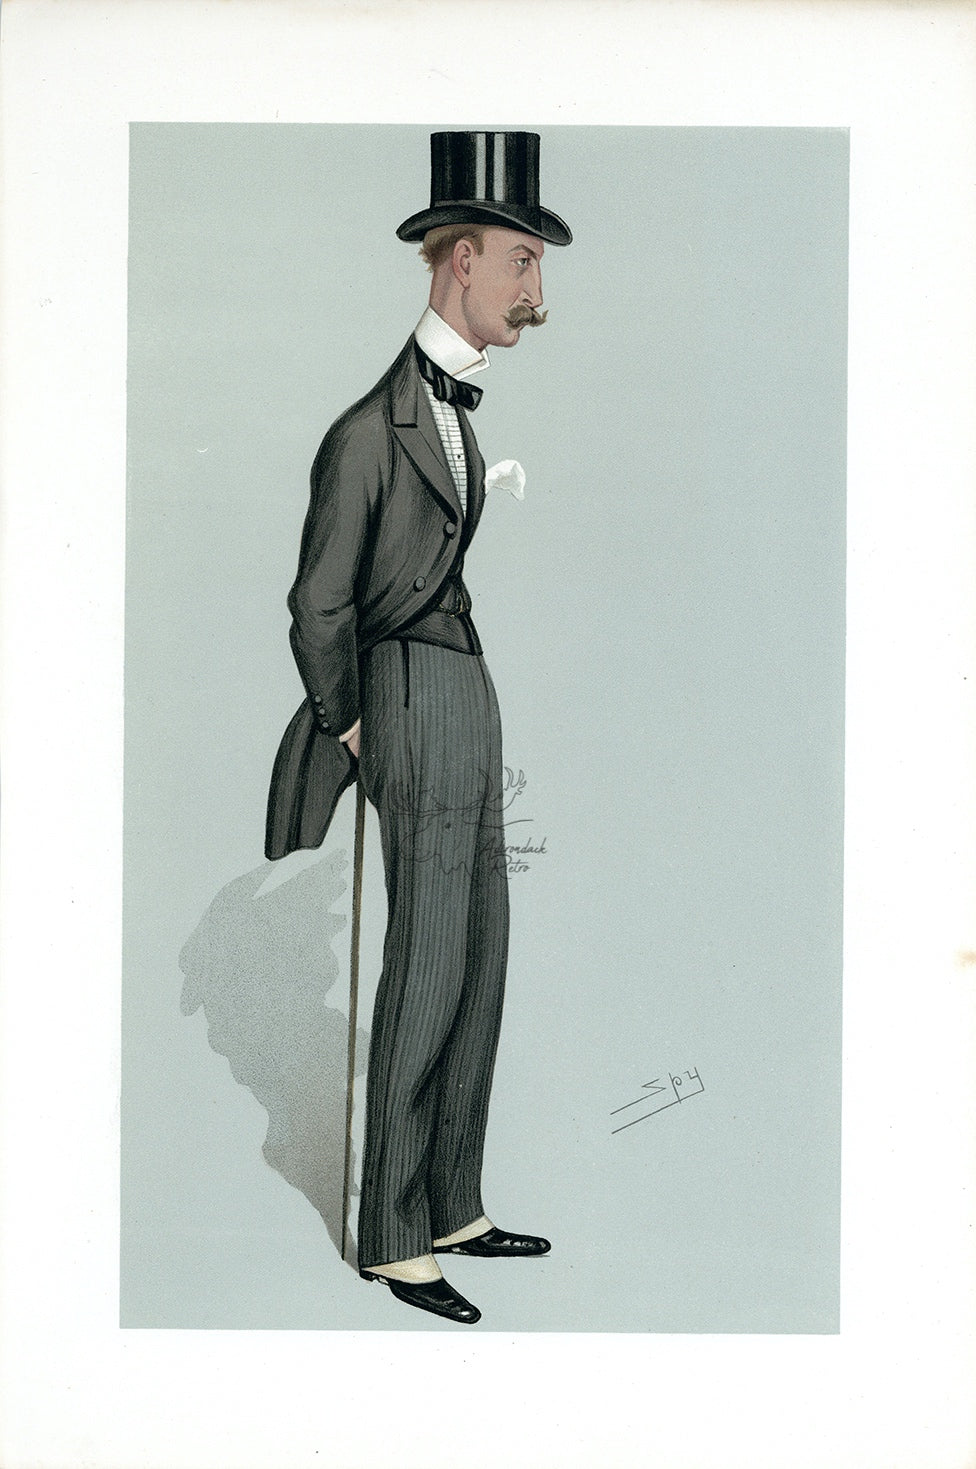 1889 Vanity Fair Caricature Proof Plate by SPY - Lord Sandhurst Spy Print